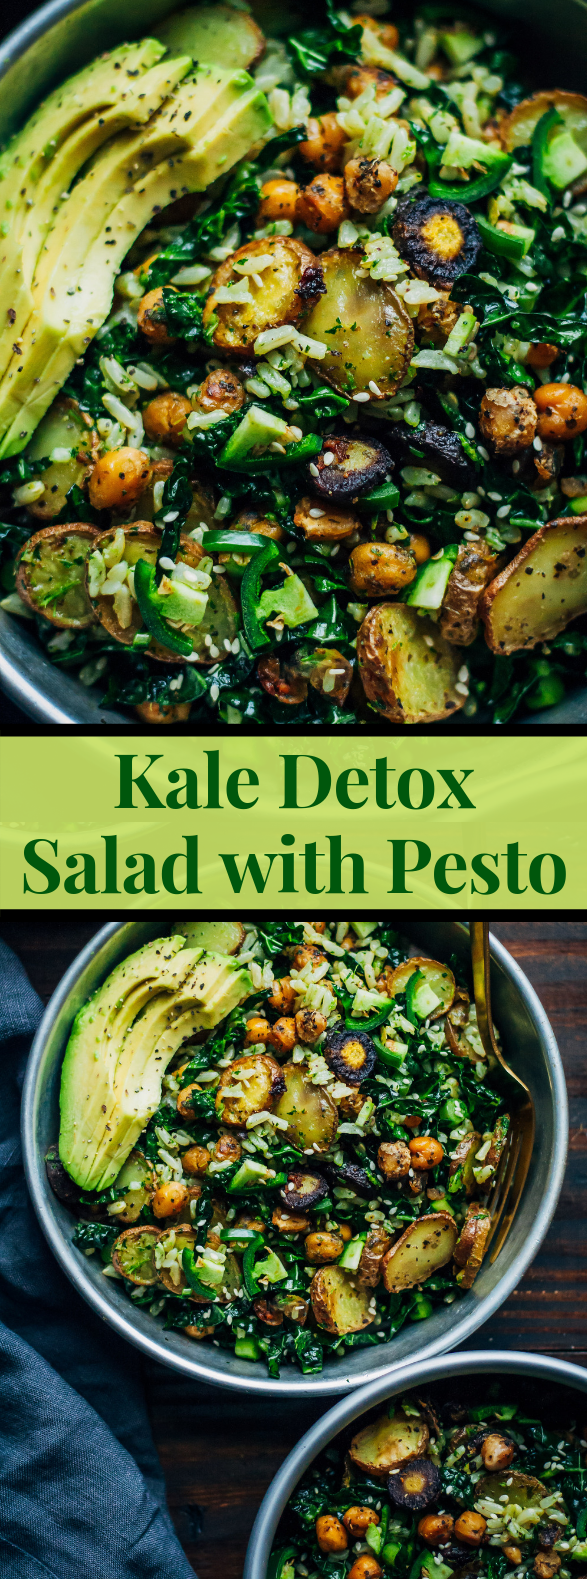 Kale Detox Salad w/ Pesto #cleaneating #perfectmeal